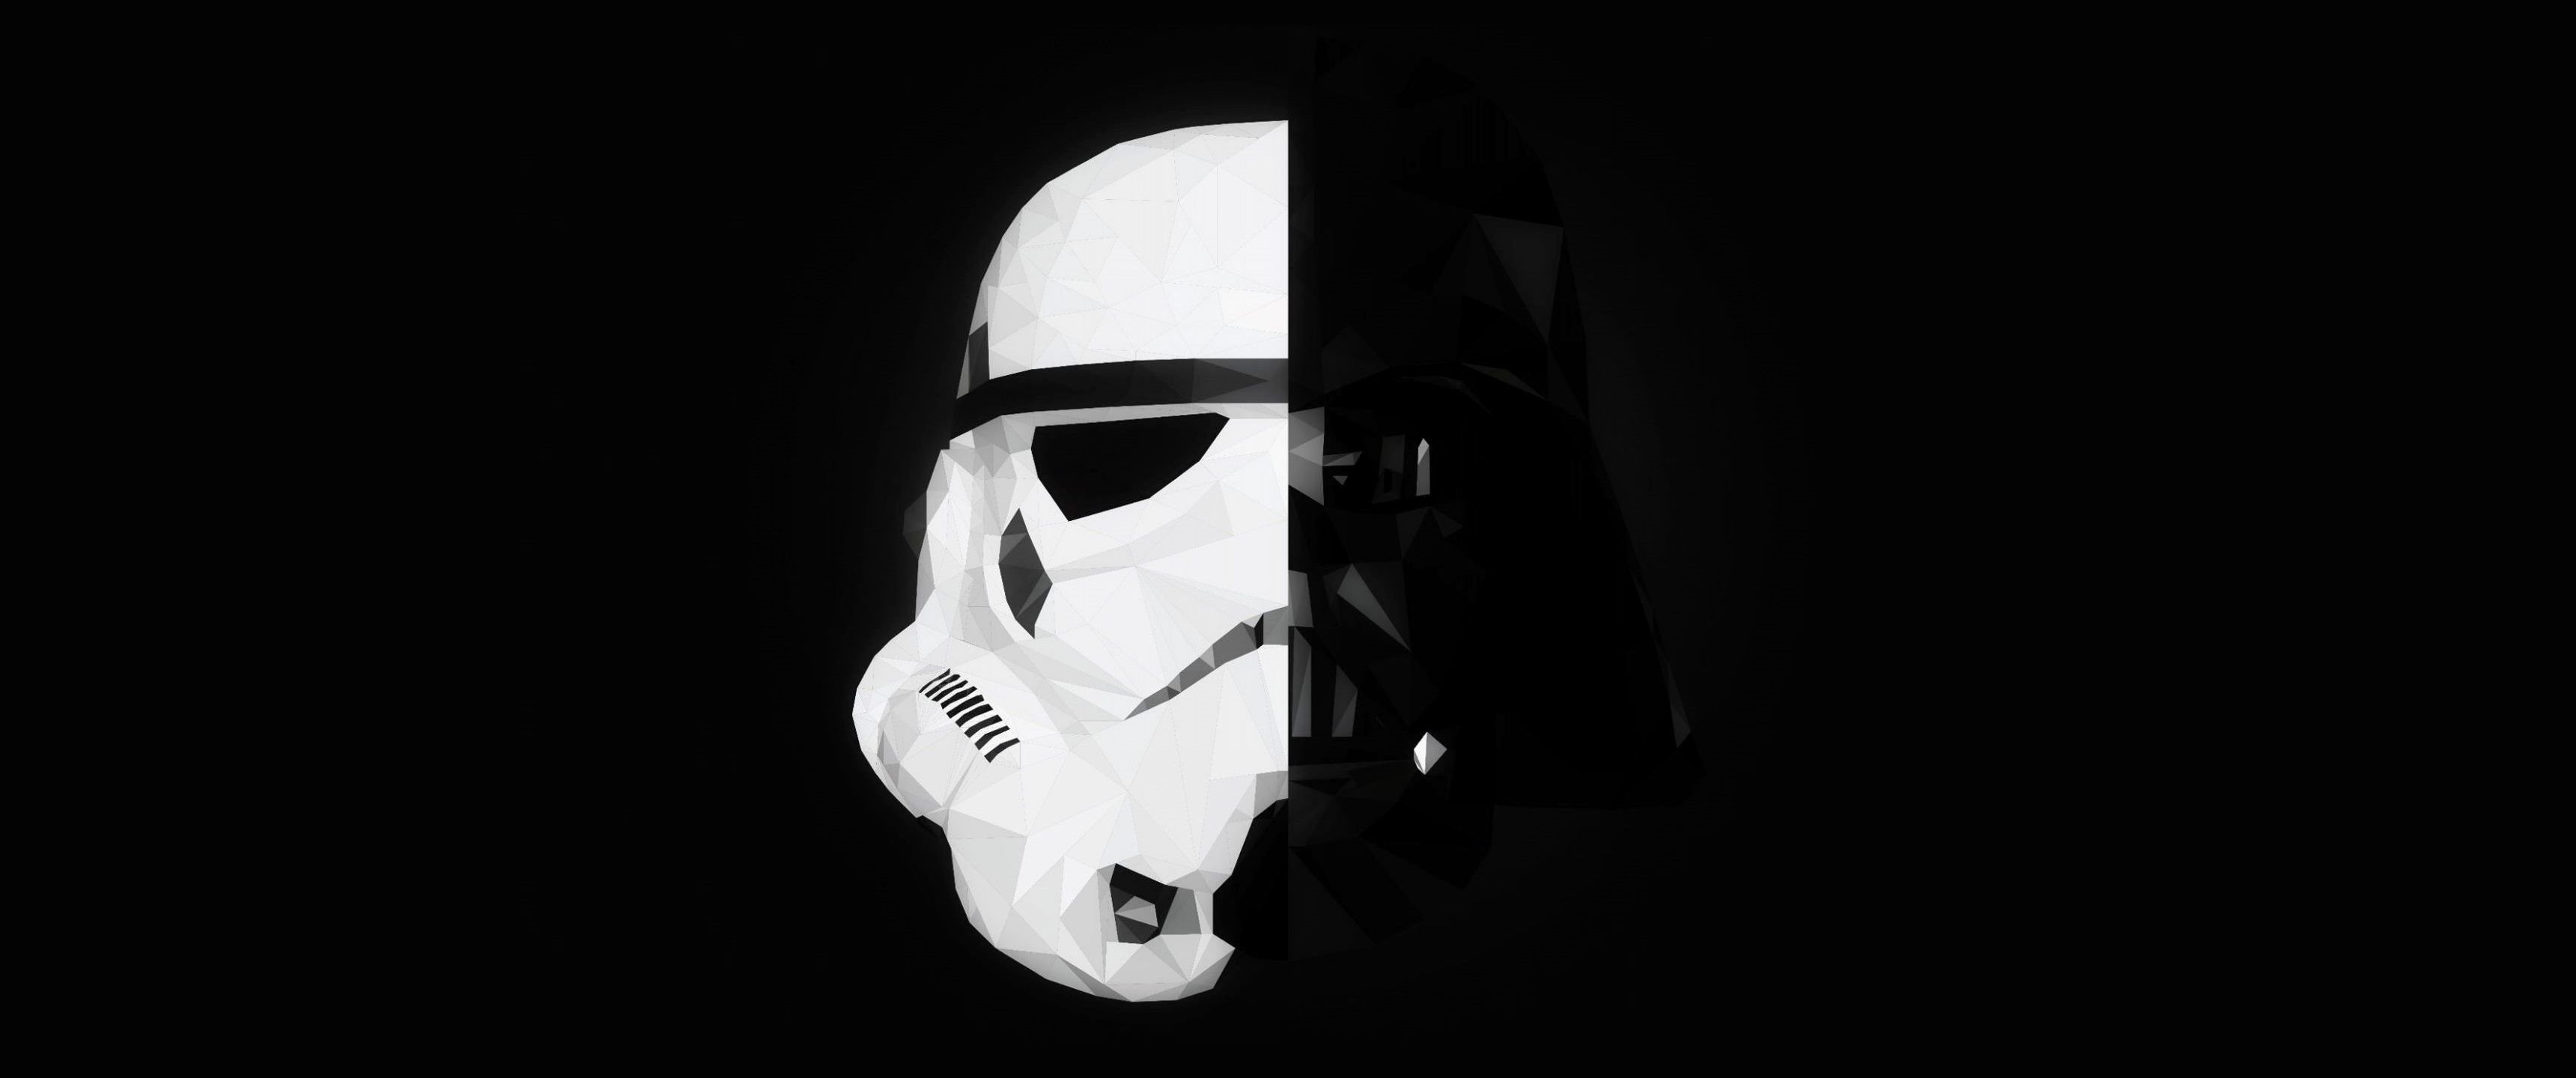 4k Wallpaper Star Wars Stormtrooper